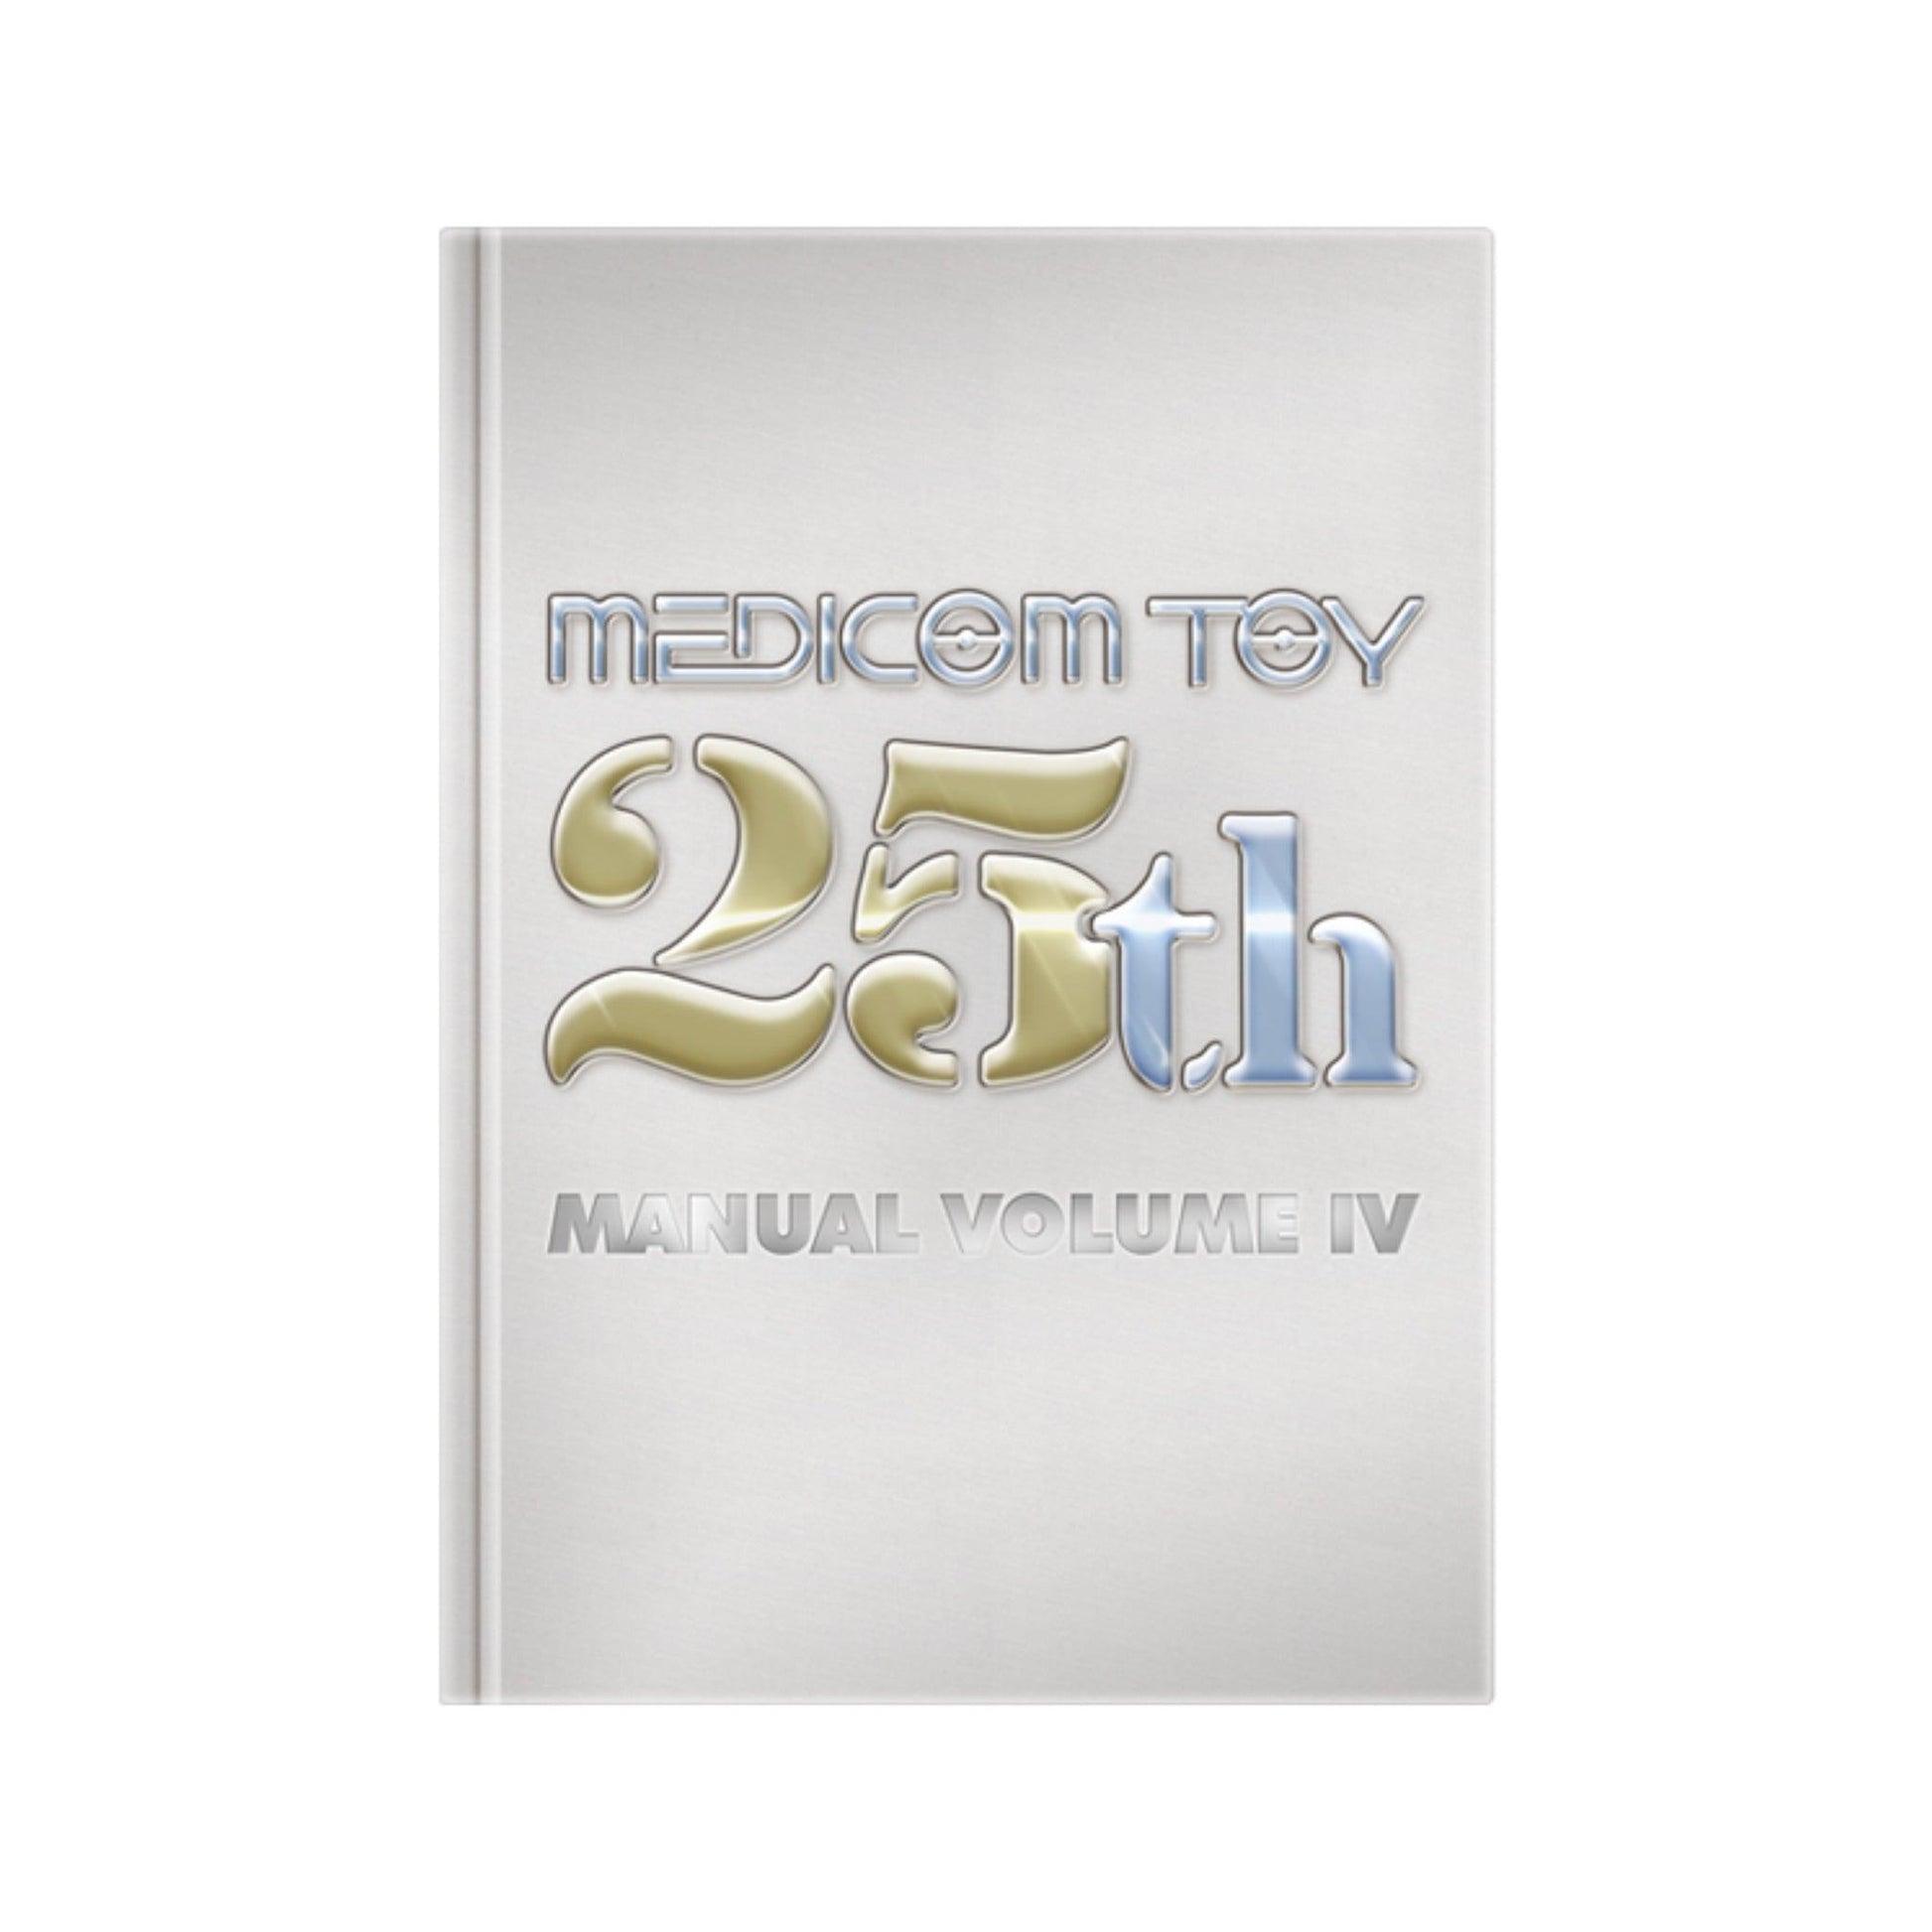 MEDICOM TOY 25TH ANNIVERSARY BOOK-MANUAL VOLUME IV - Medicom